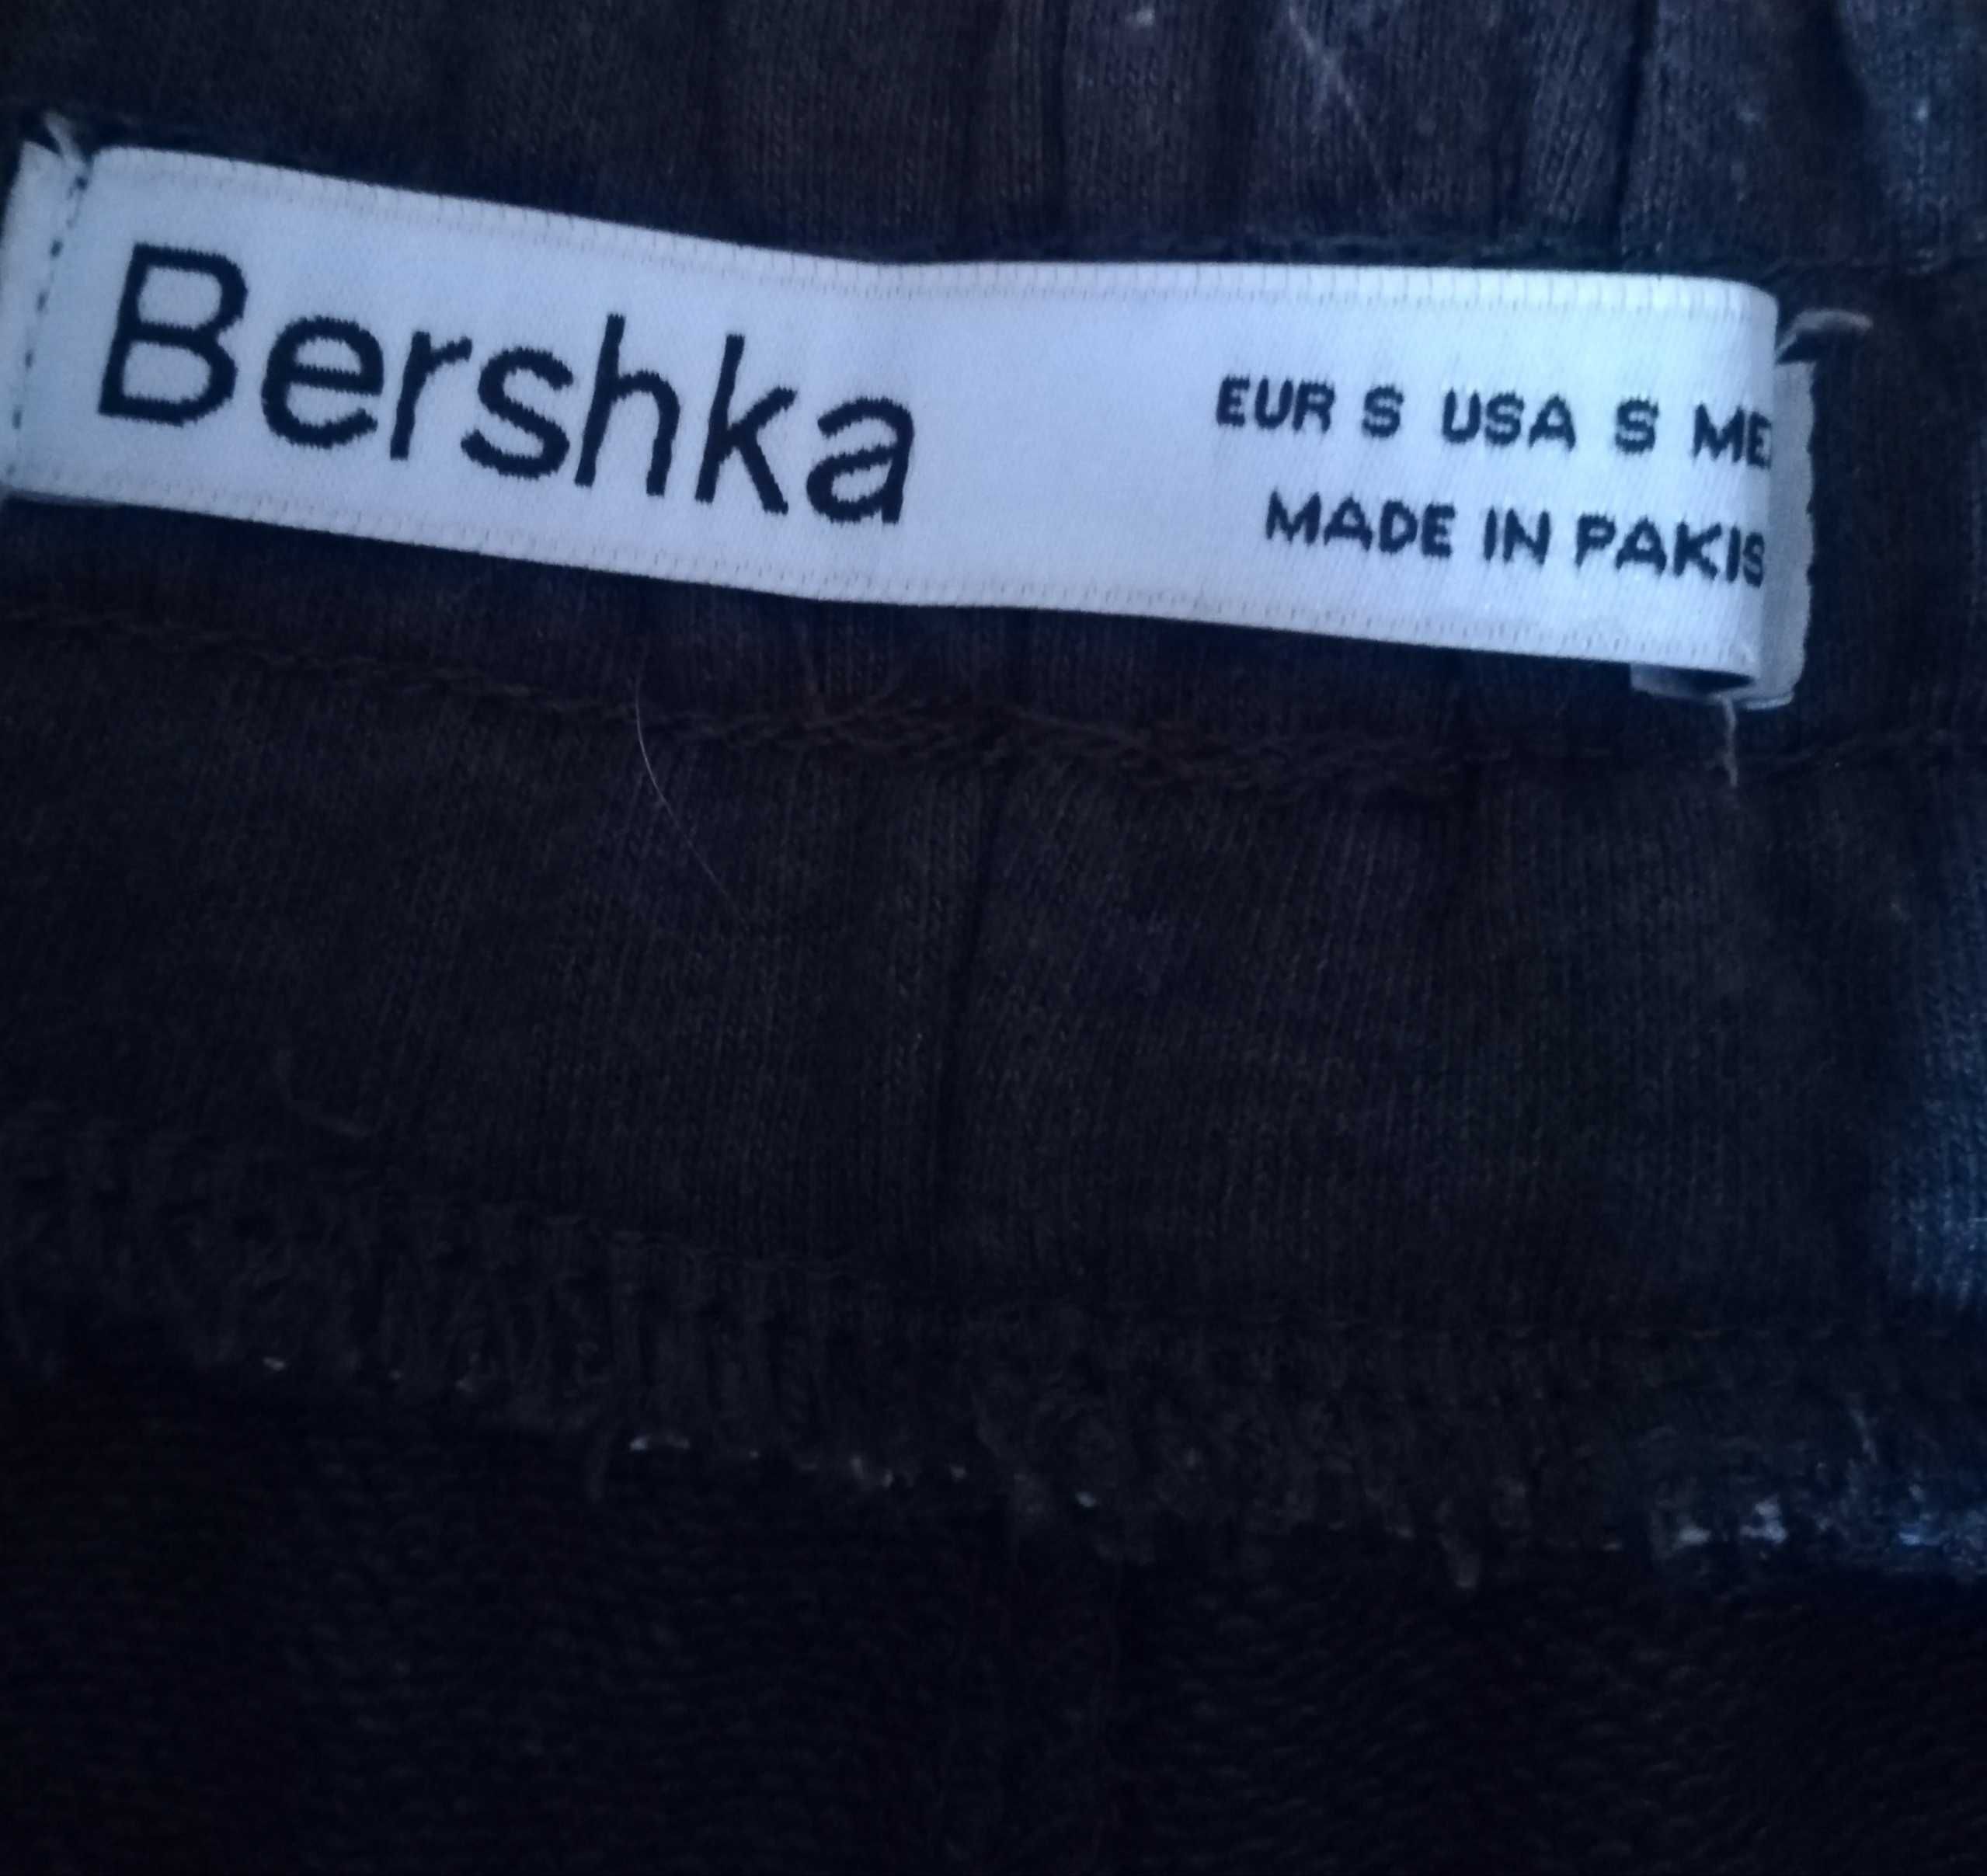 Calções Bershka S